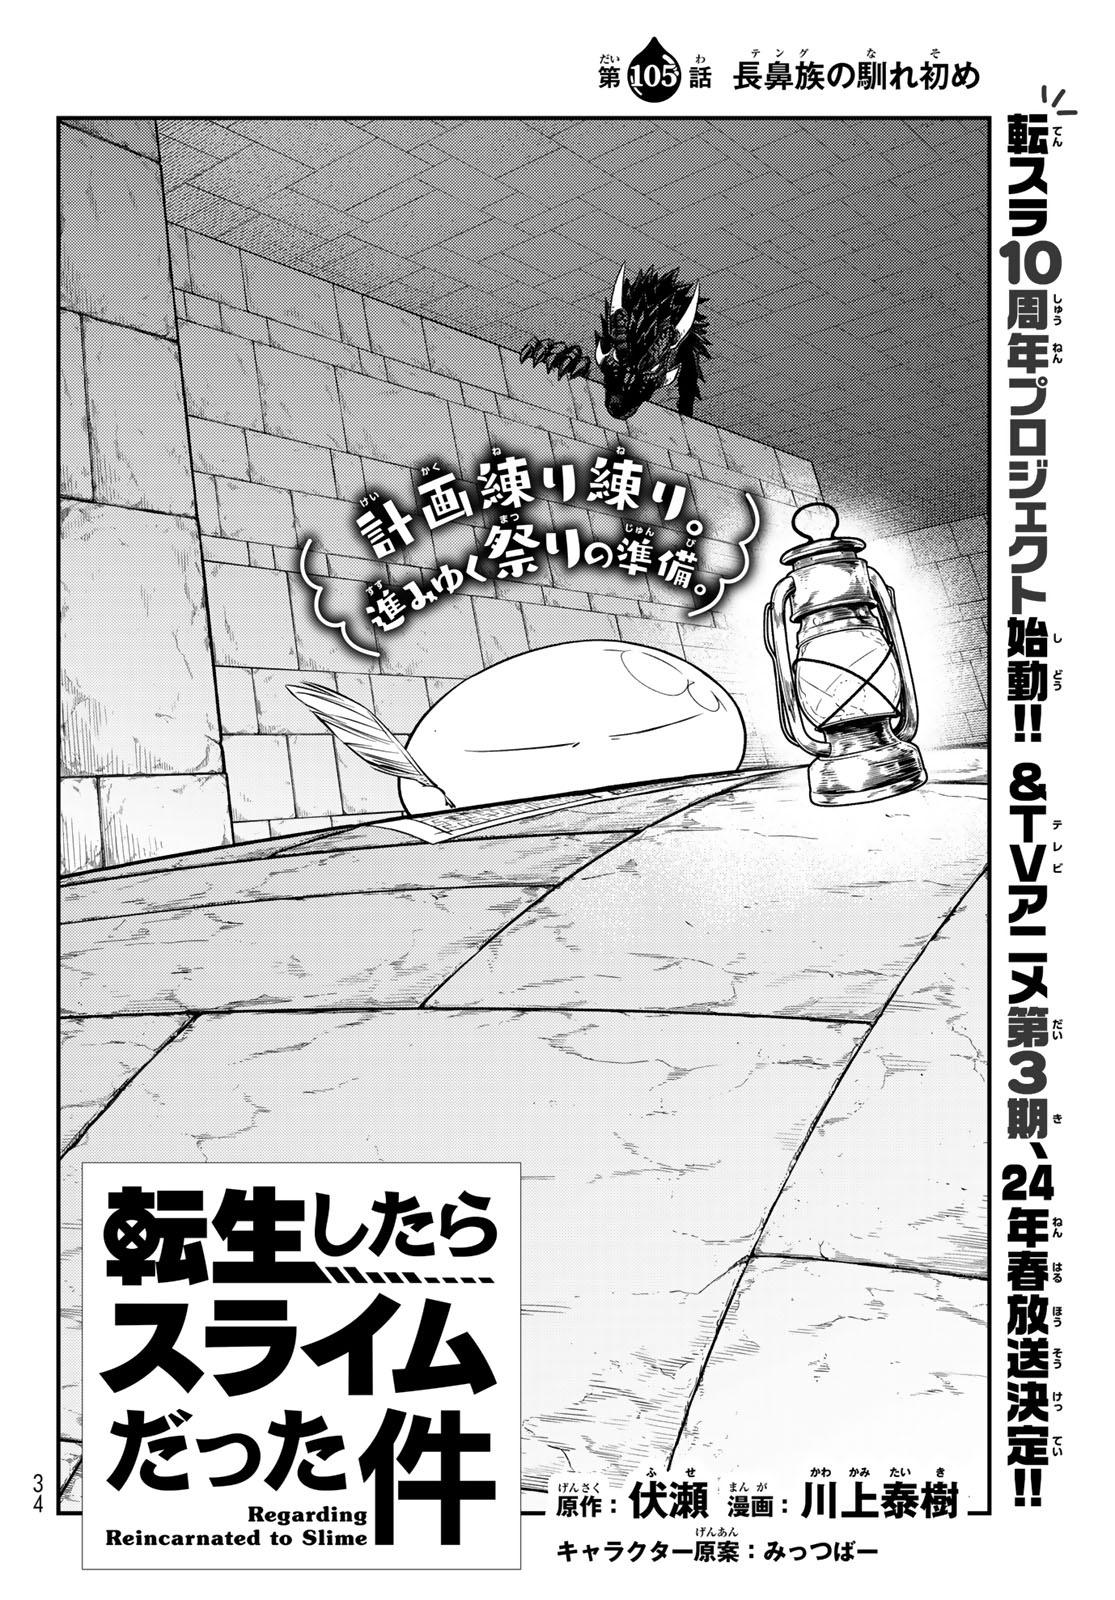 Read Tensei Shitara Slime Datta Ken Chapter 109 on Mangakakalot